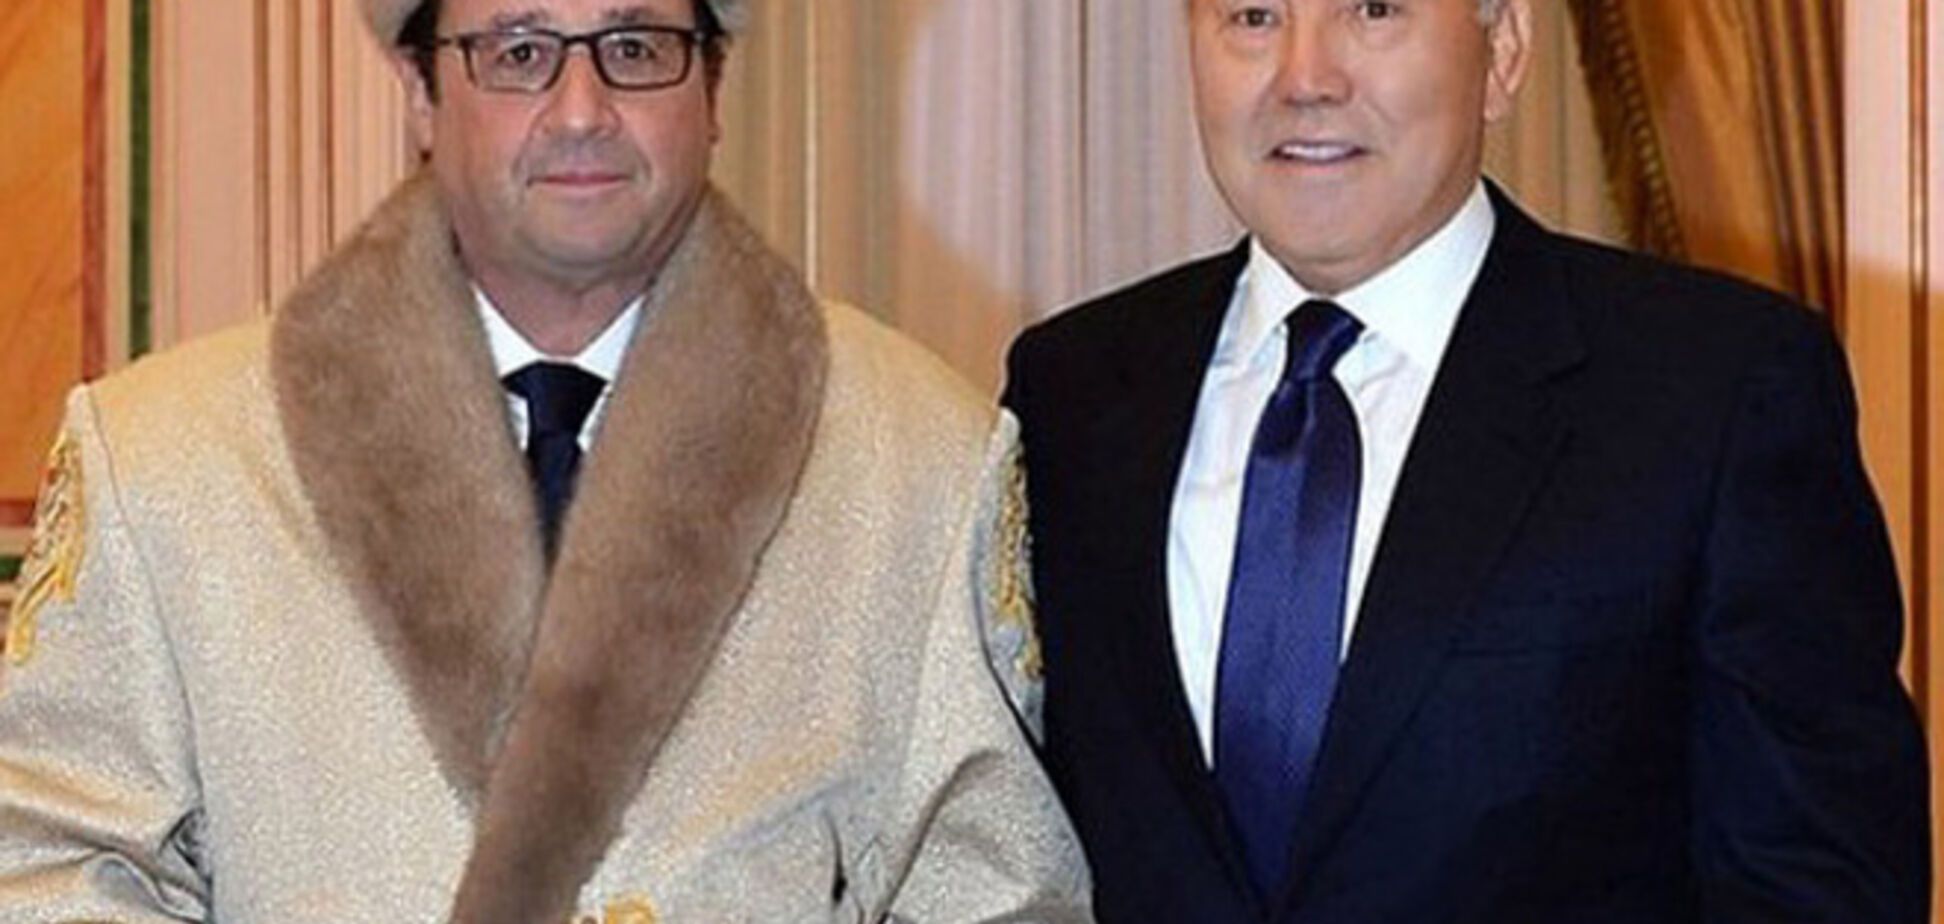 Французы высмеяли в сети казахский наряд президента Олланда. Фотофакт